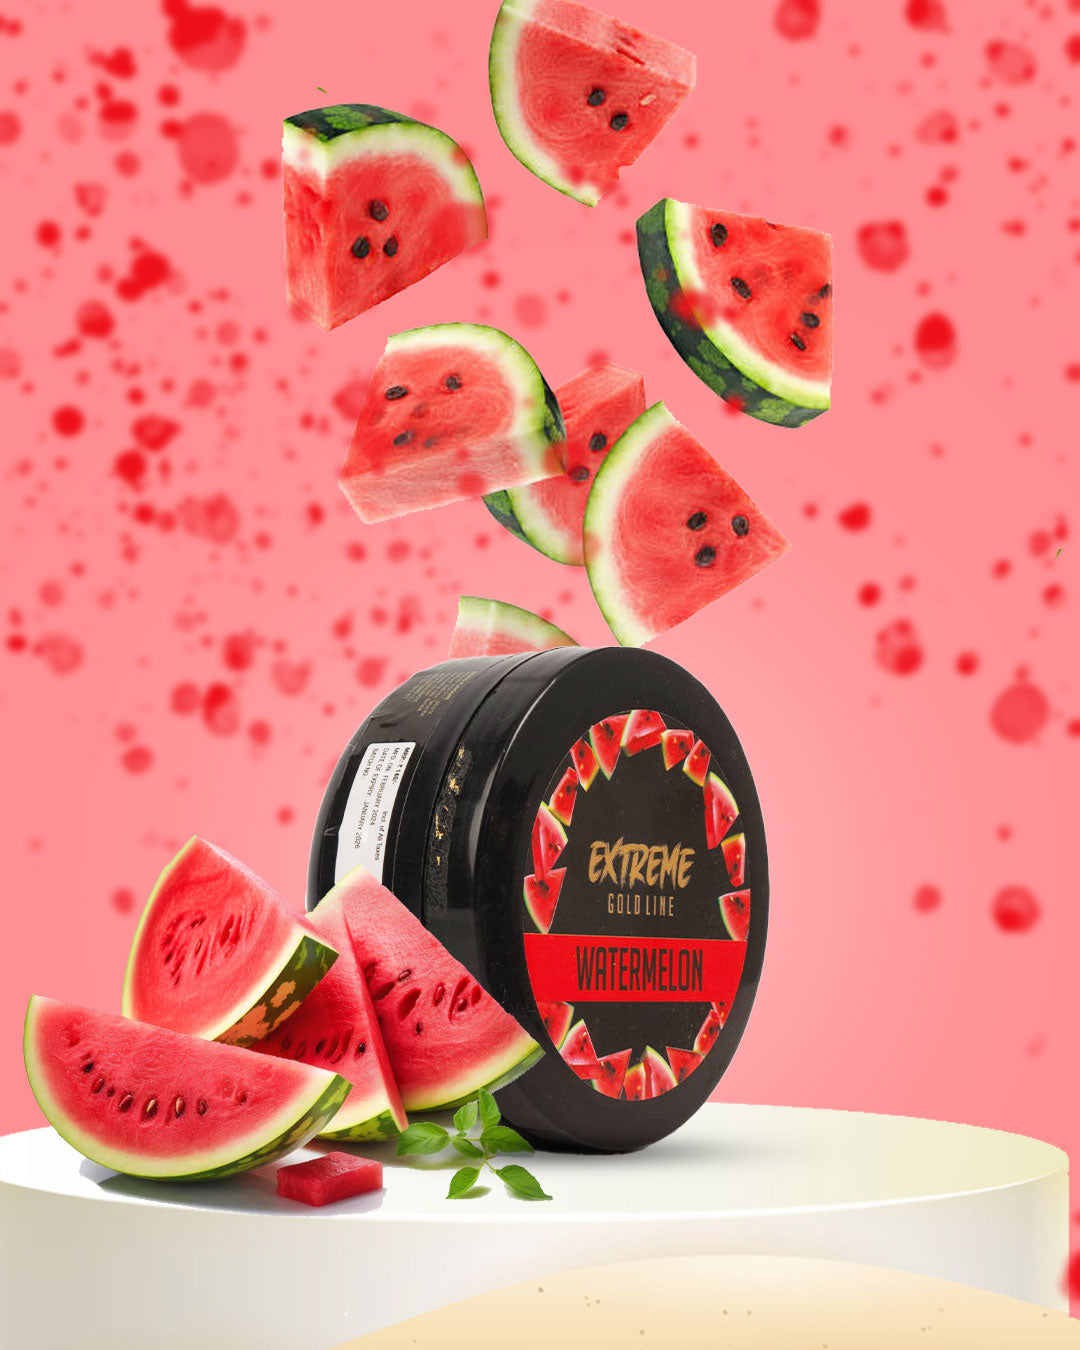 Extreme Gold Line Watermelon Hookah Flavor - 100g Box